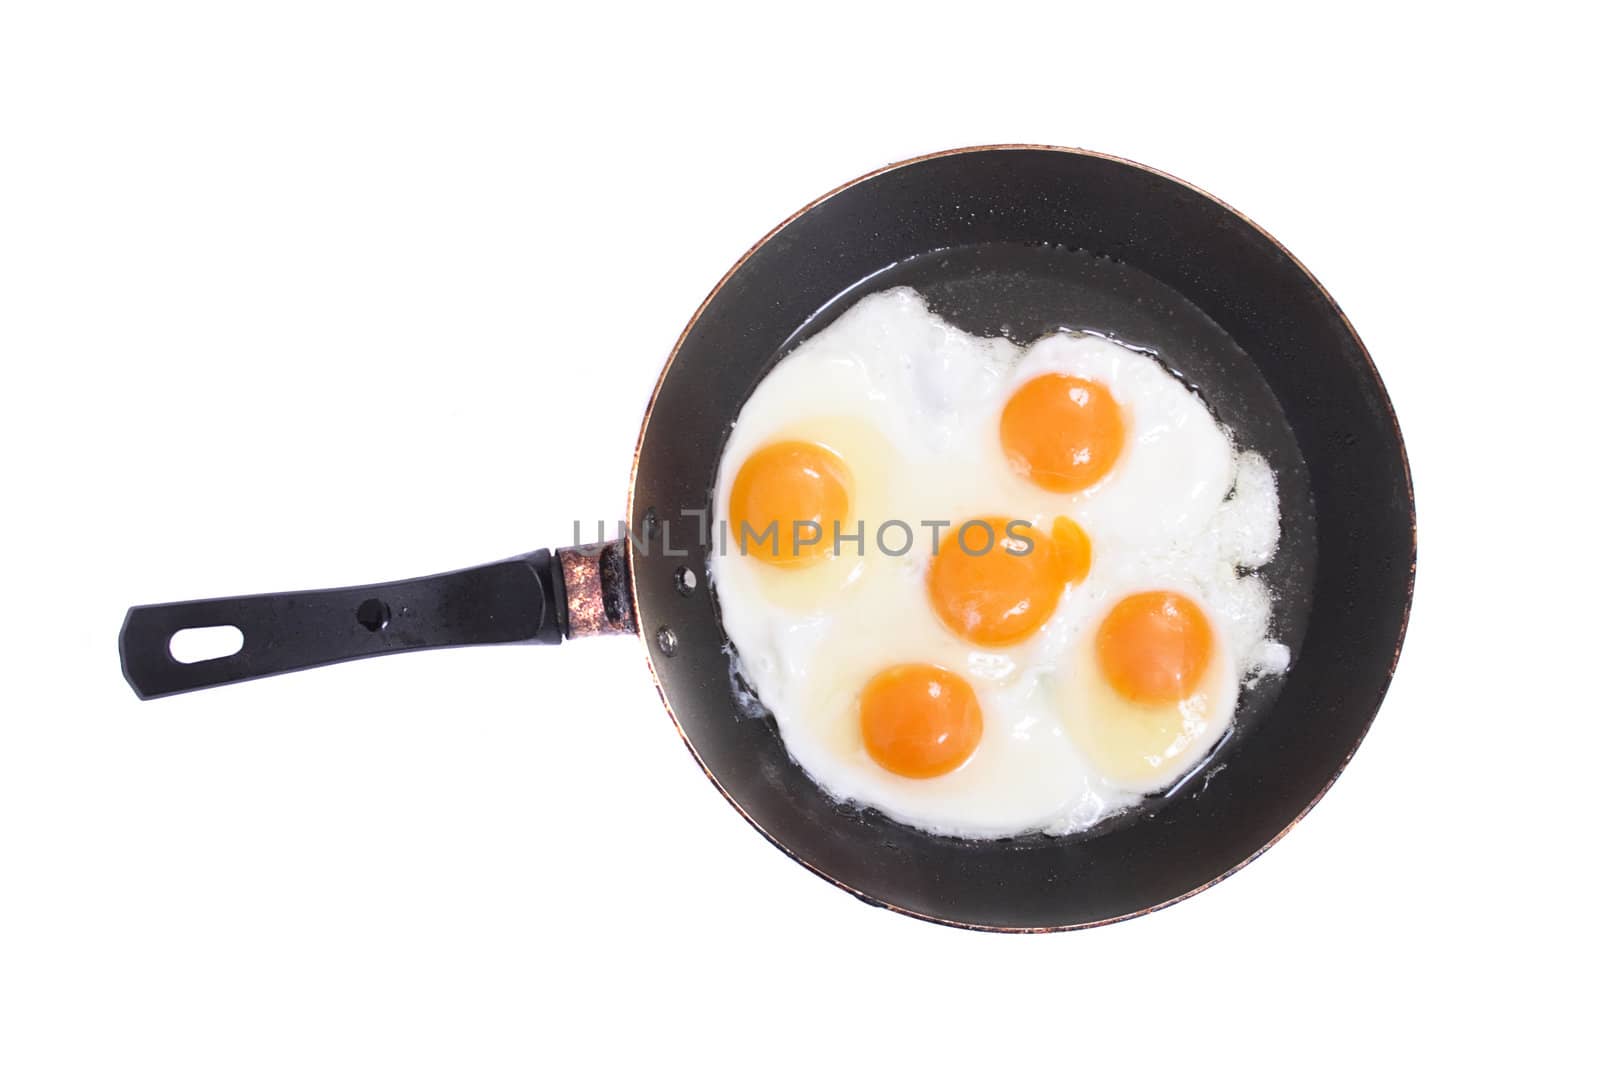 eggs by jonnysek